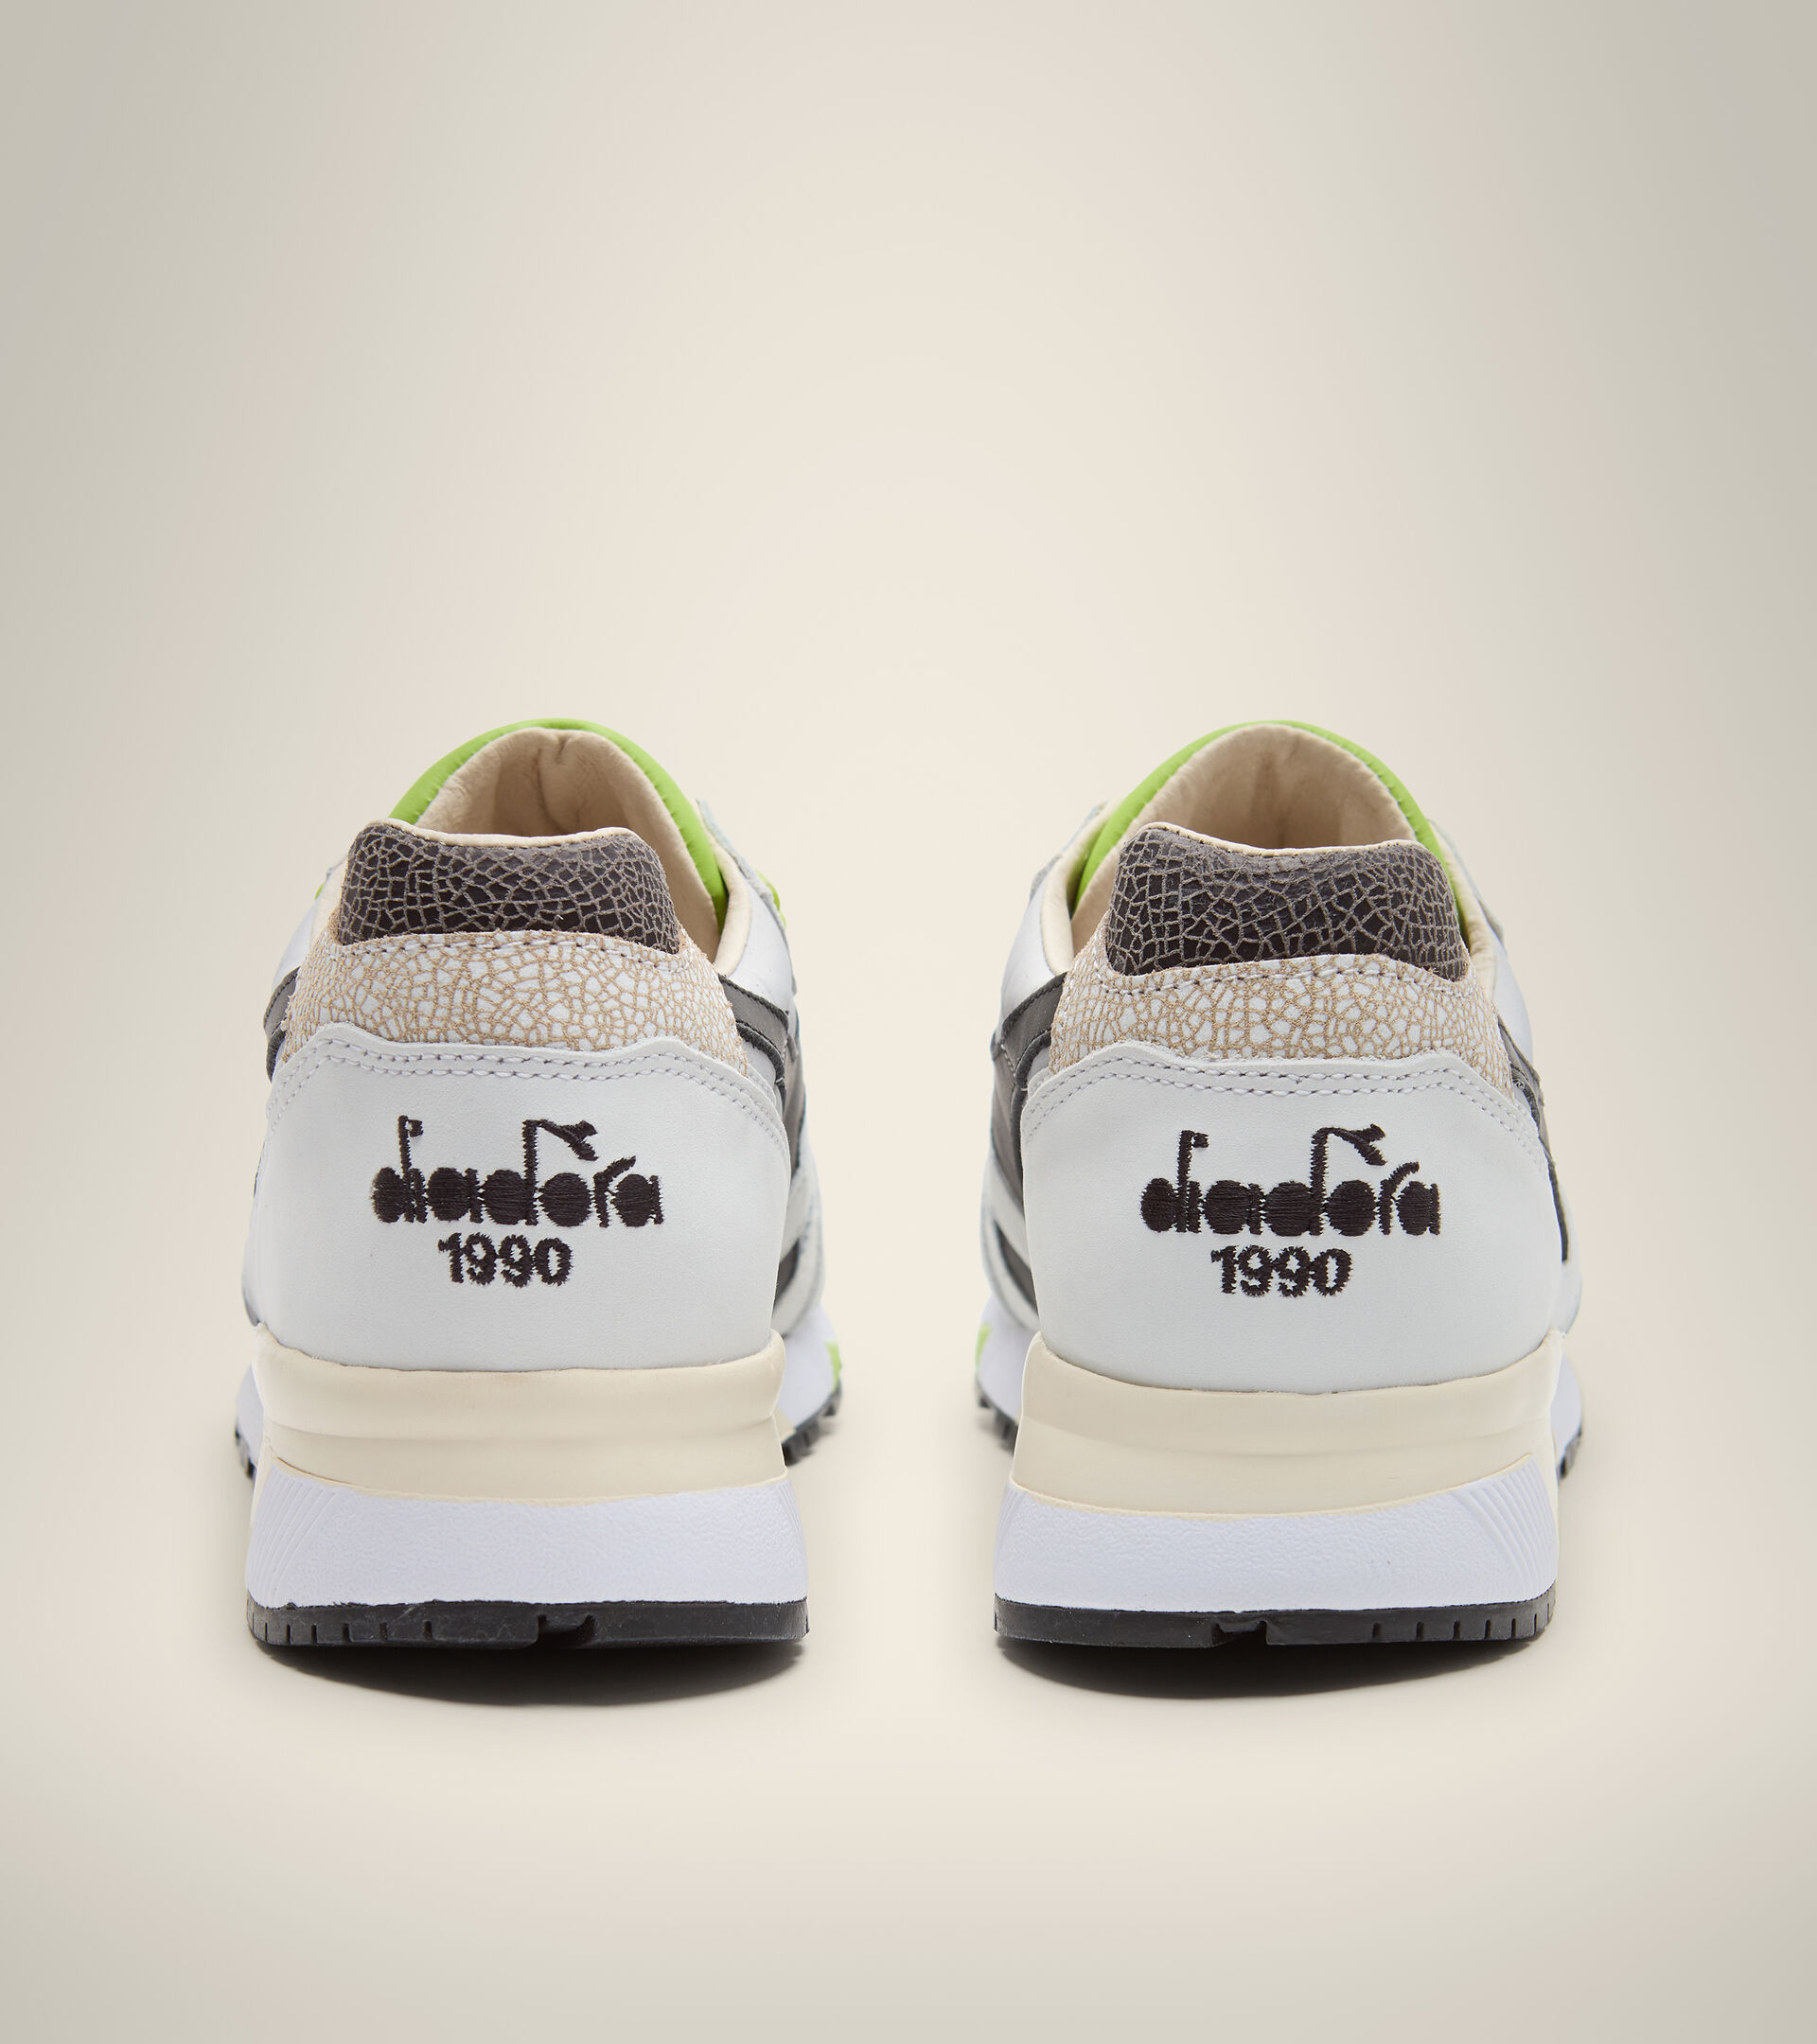 Made in Italy Heritage Shoe - Men N9000 ITALIA WHITE/GLACIER GRAY - Diadora